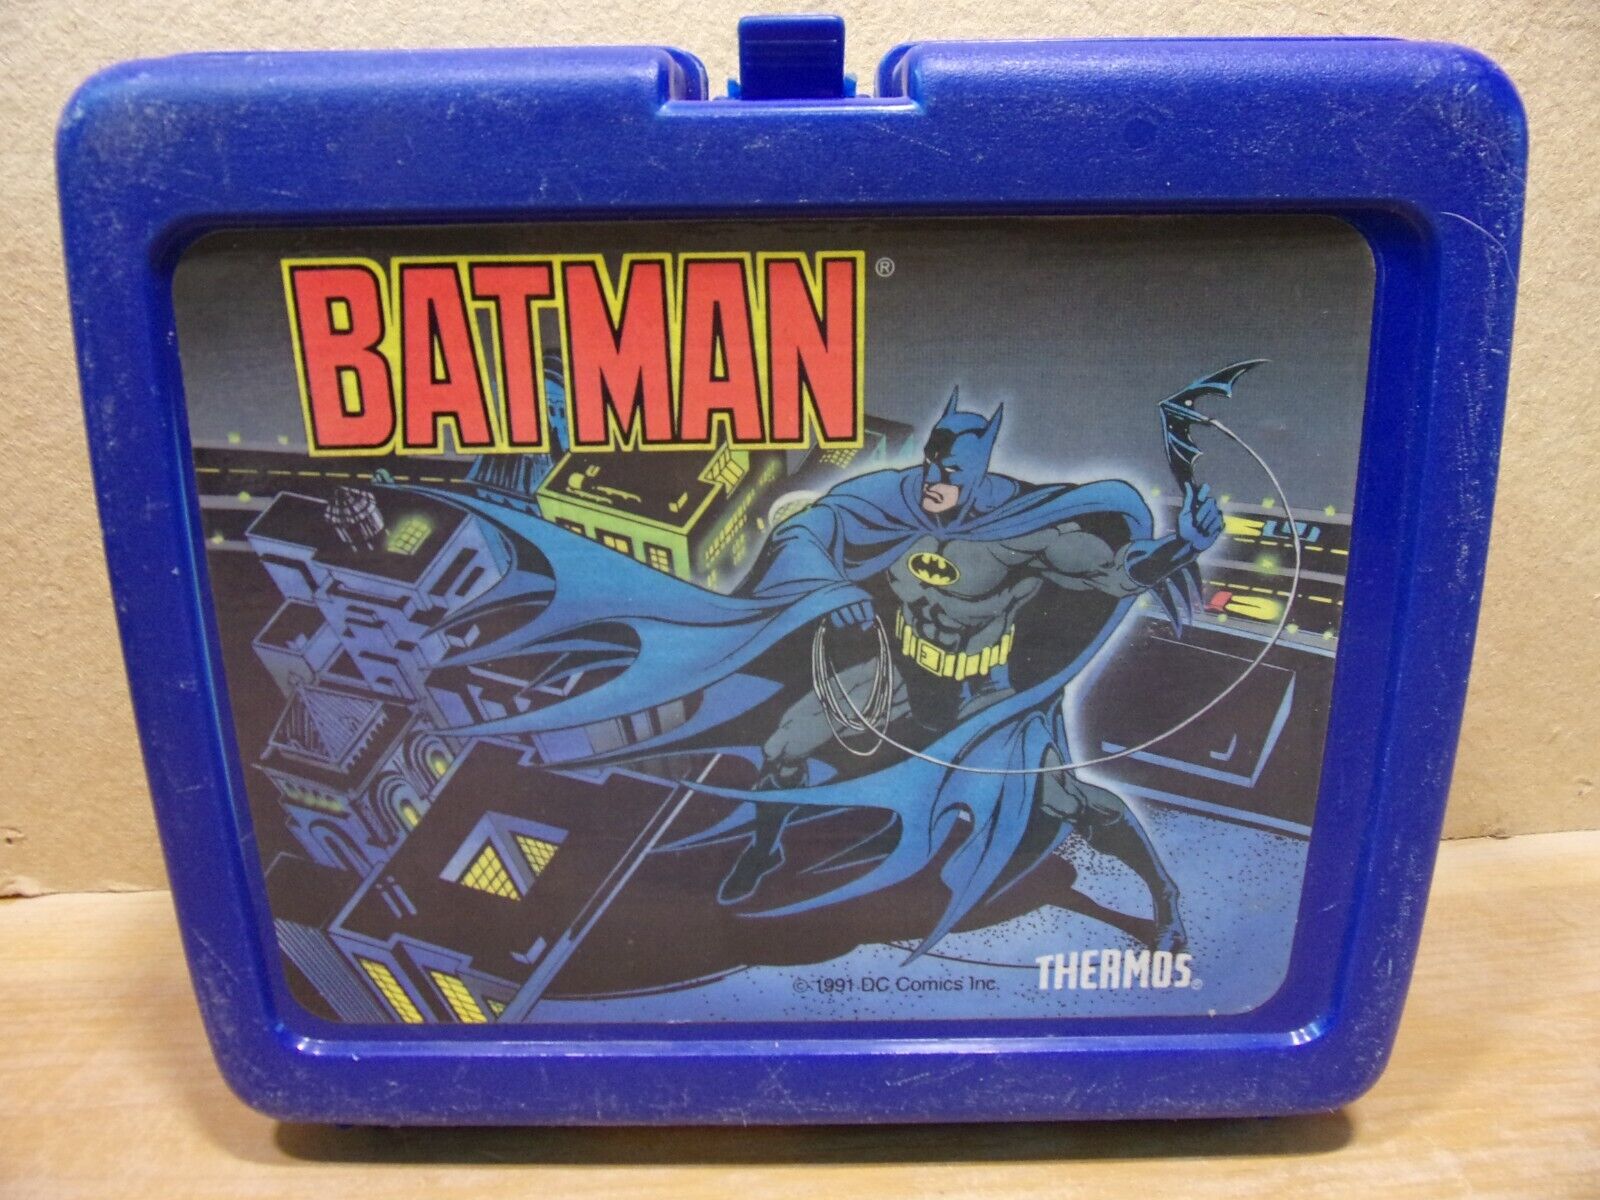 Batman Vintage Blue Plastic Lunch Box Thermos Brand Lunchbox 1991 No Thermos